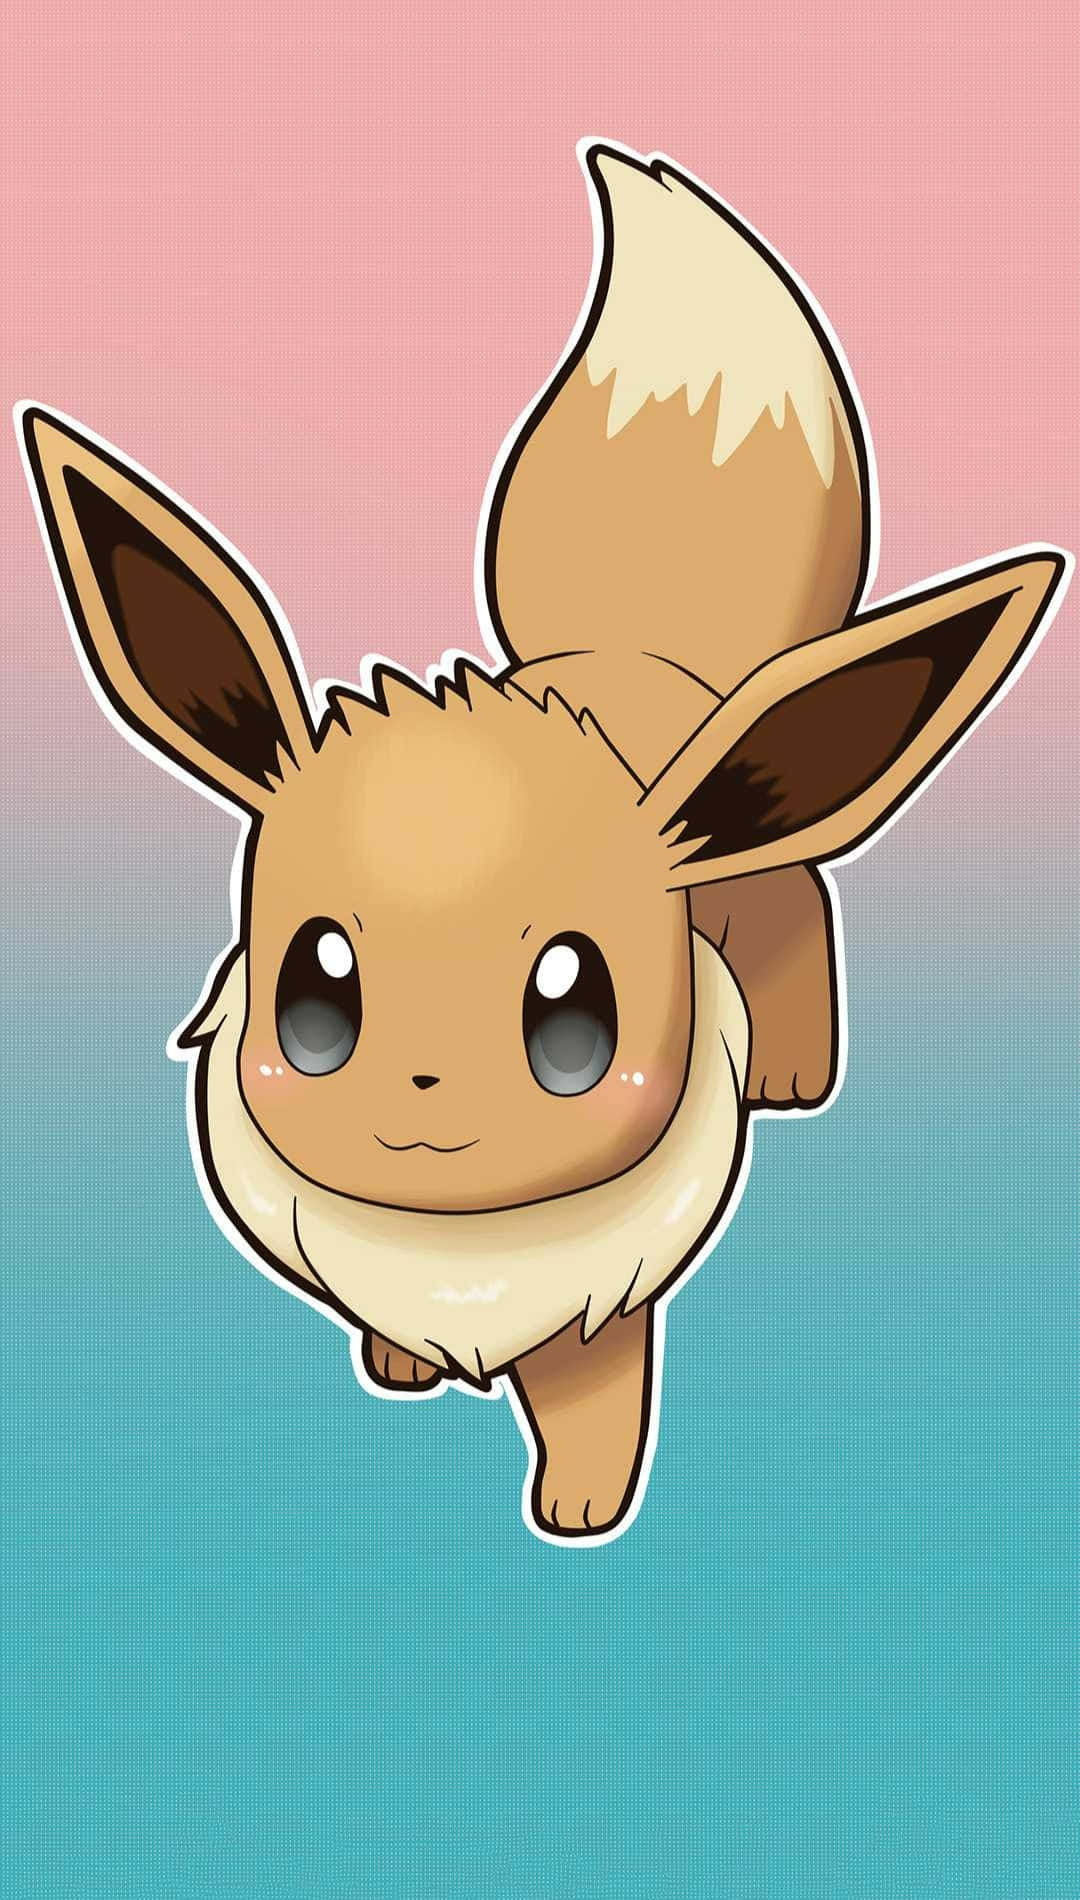 Adorable Eevee Pokemon Illustration Wallpaper